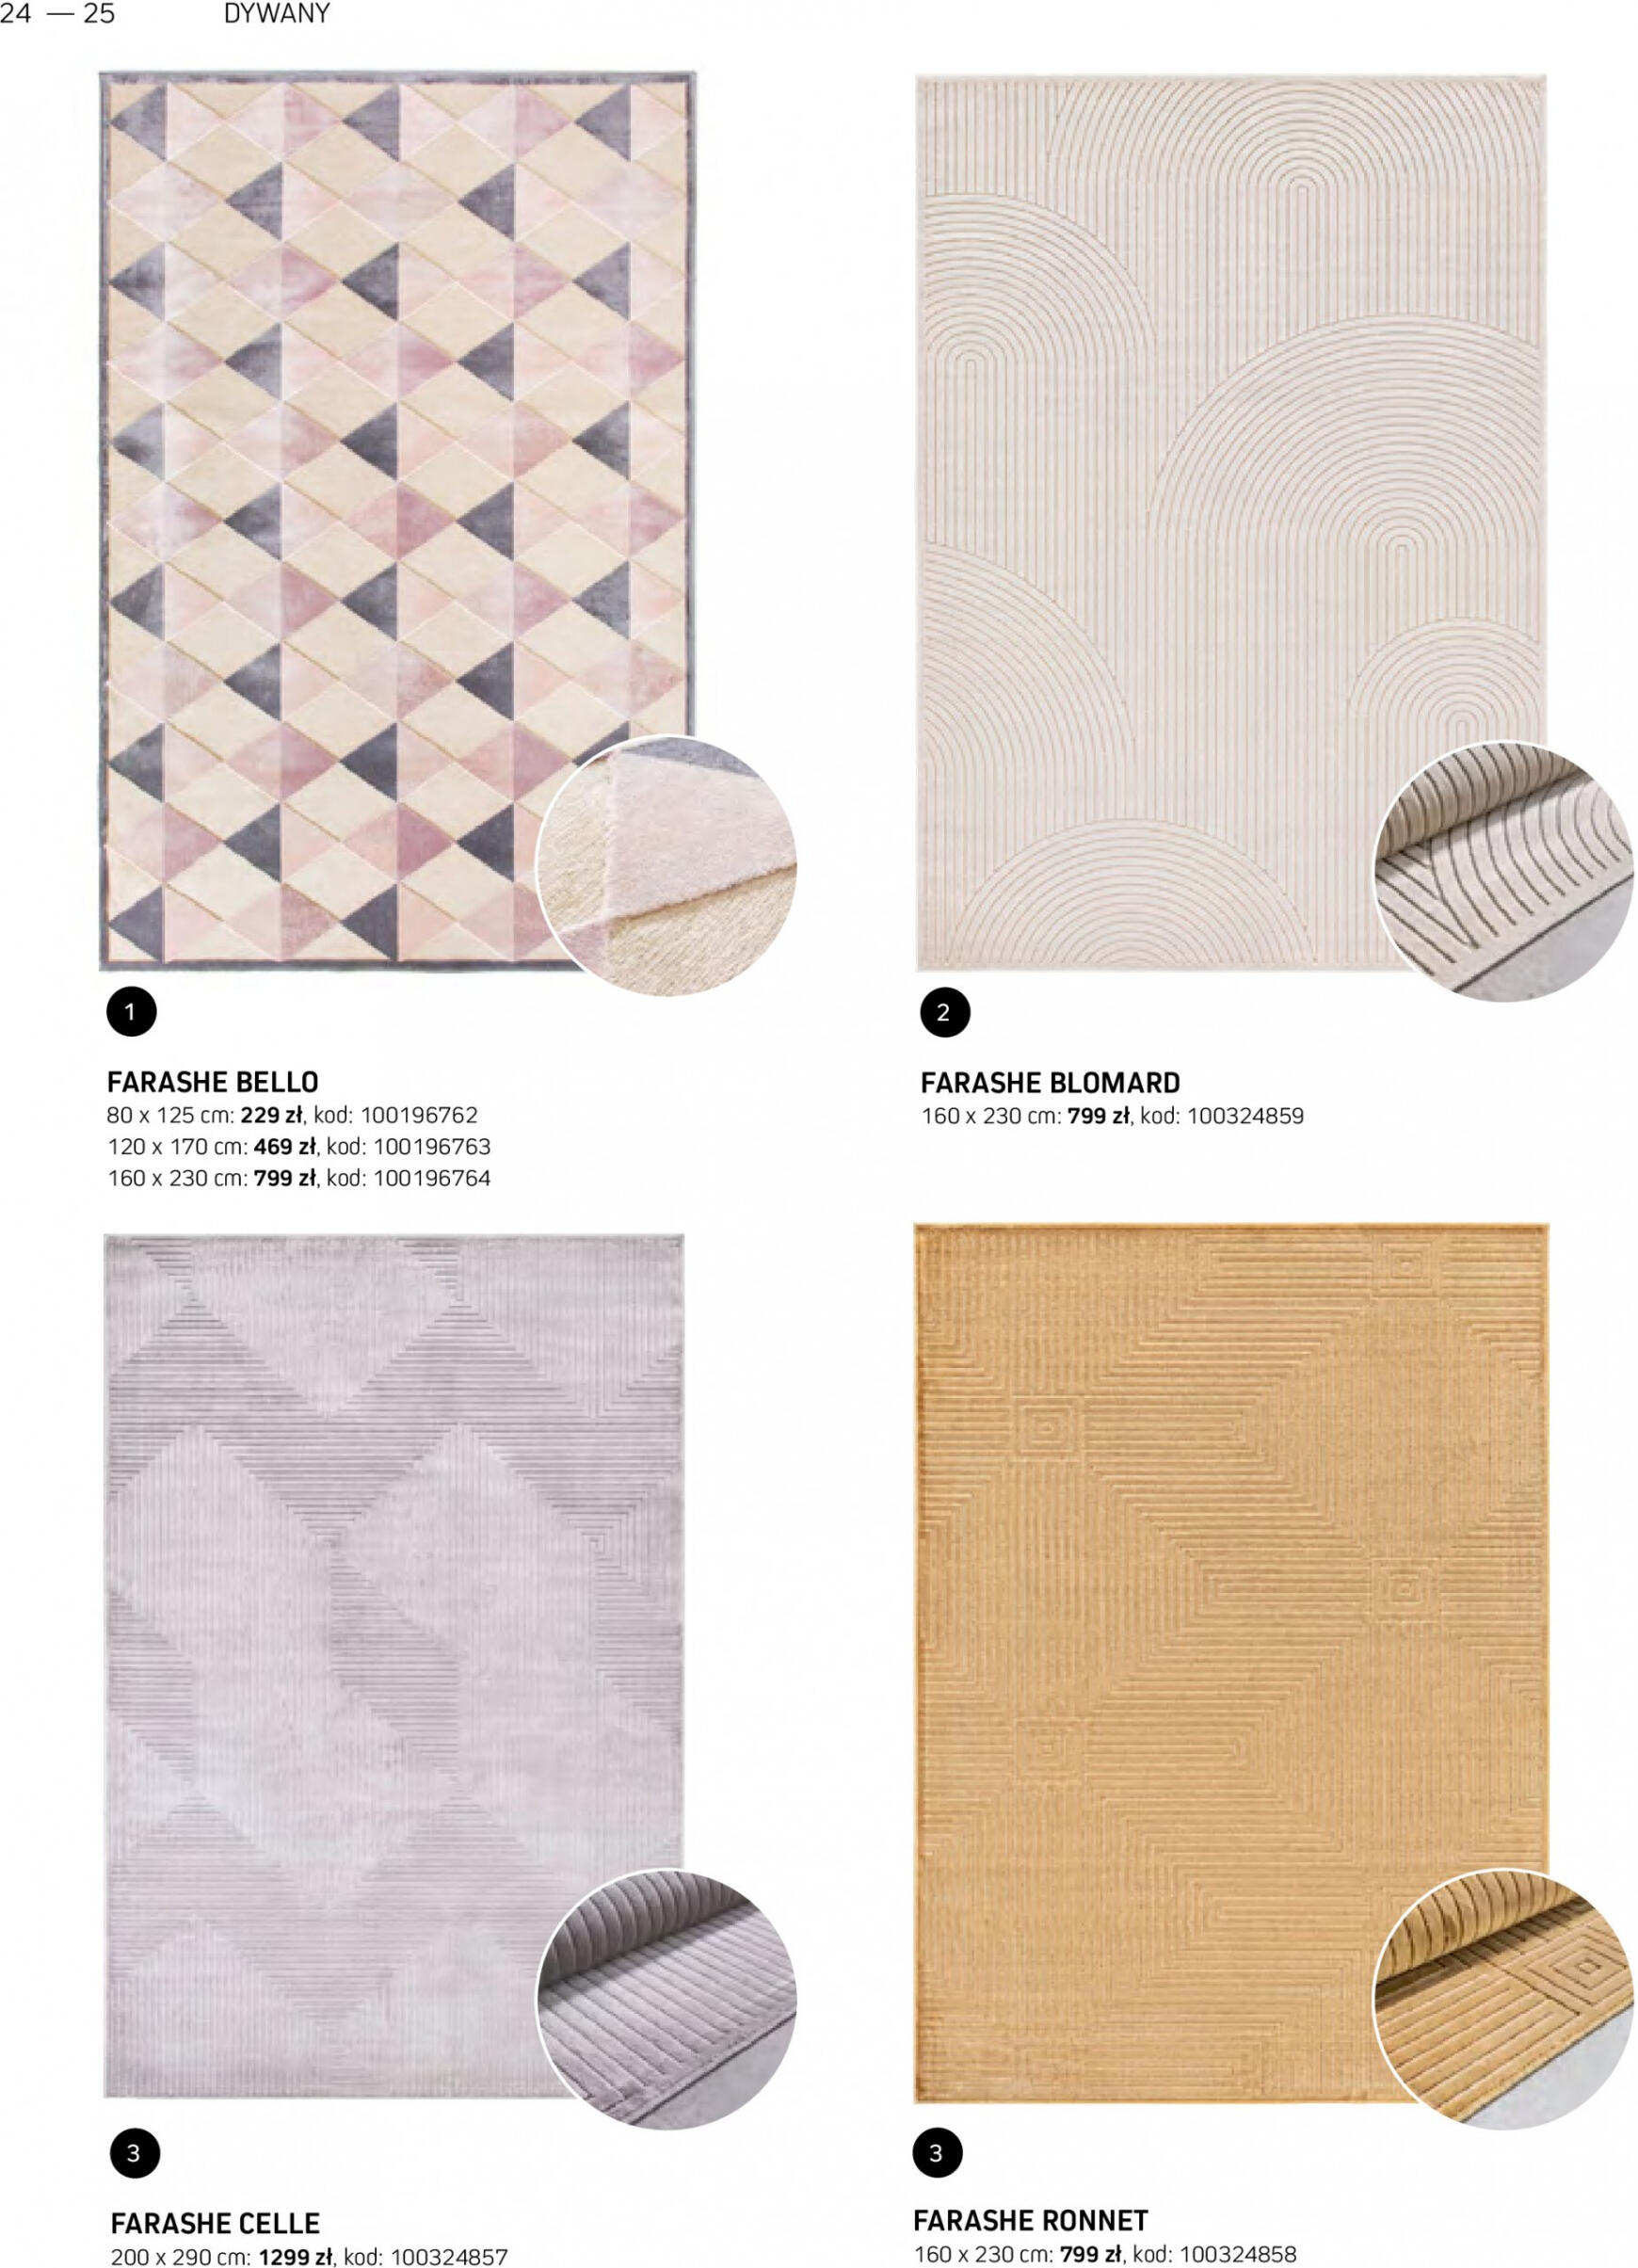 komfort - Komfort - Katalog dywany - page: 24